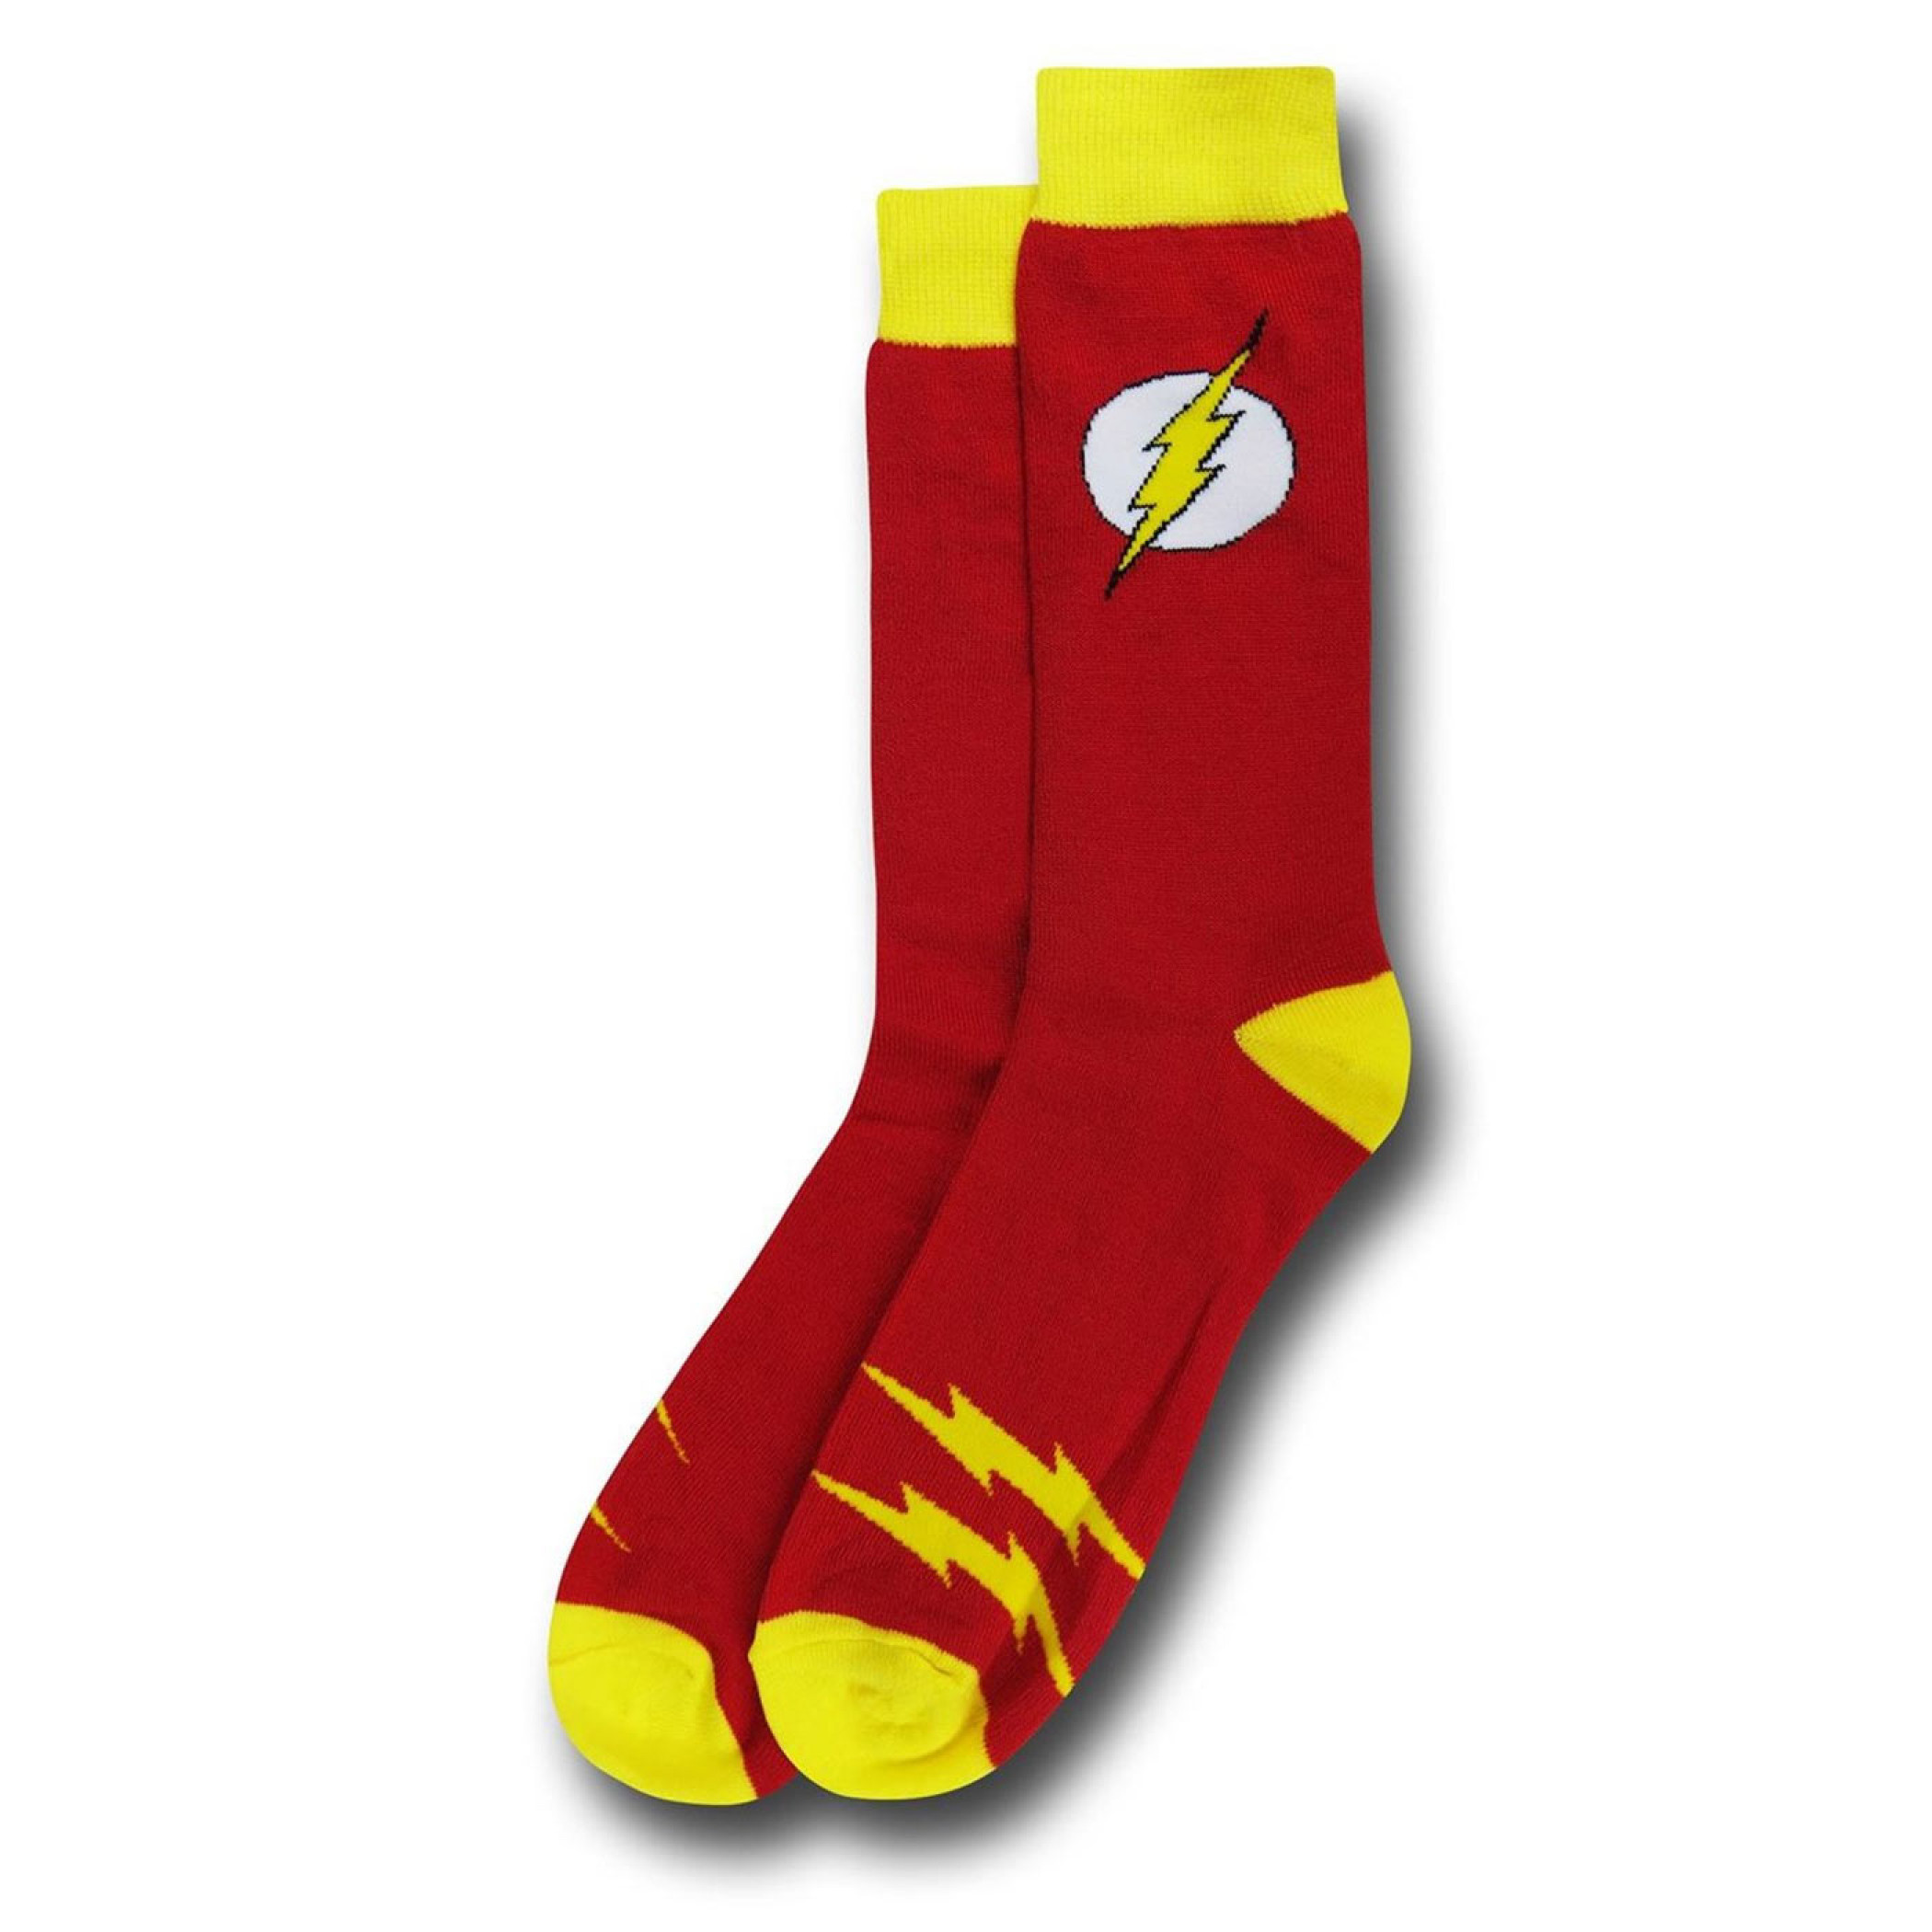 DC Comics Justice League Symbols 7-Pair Pack of Crew Socks